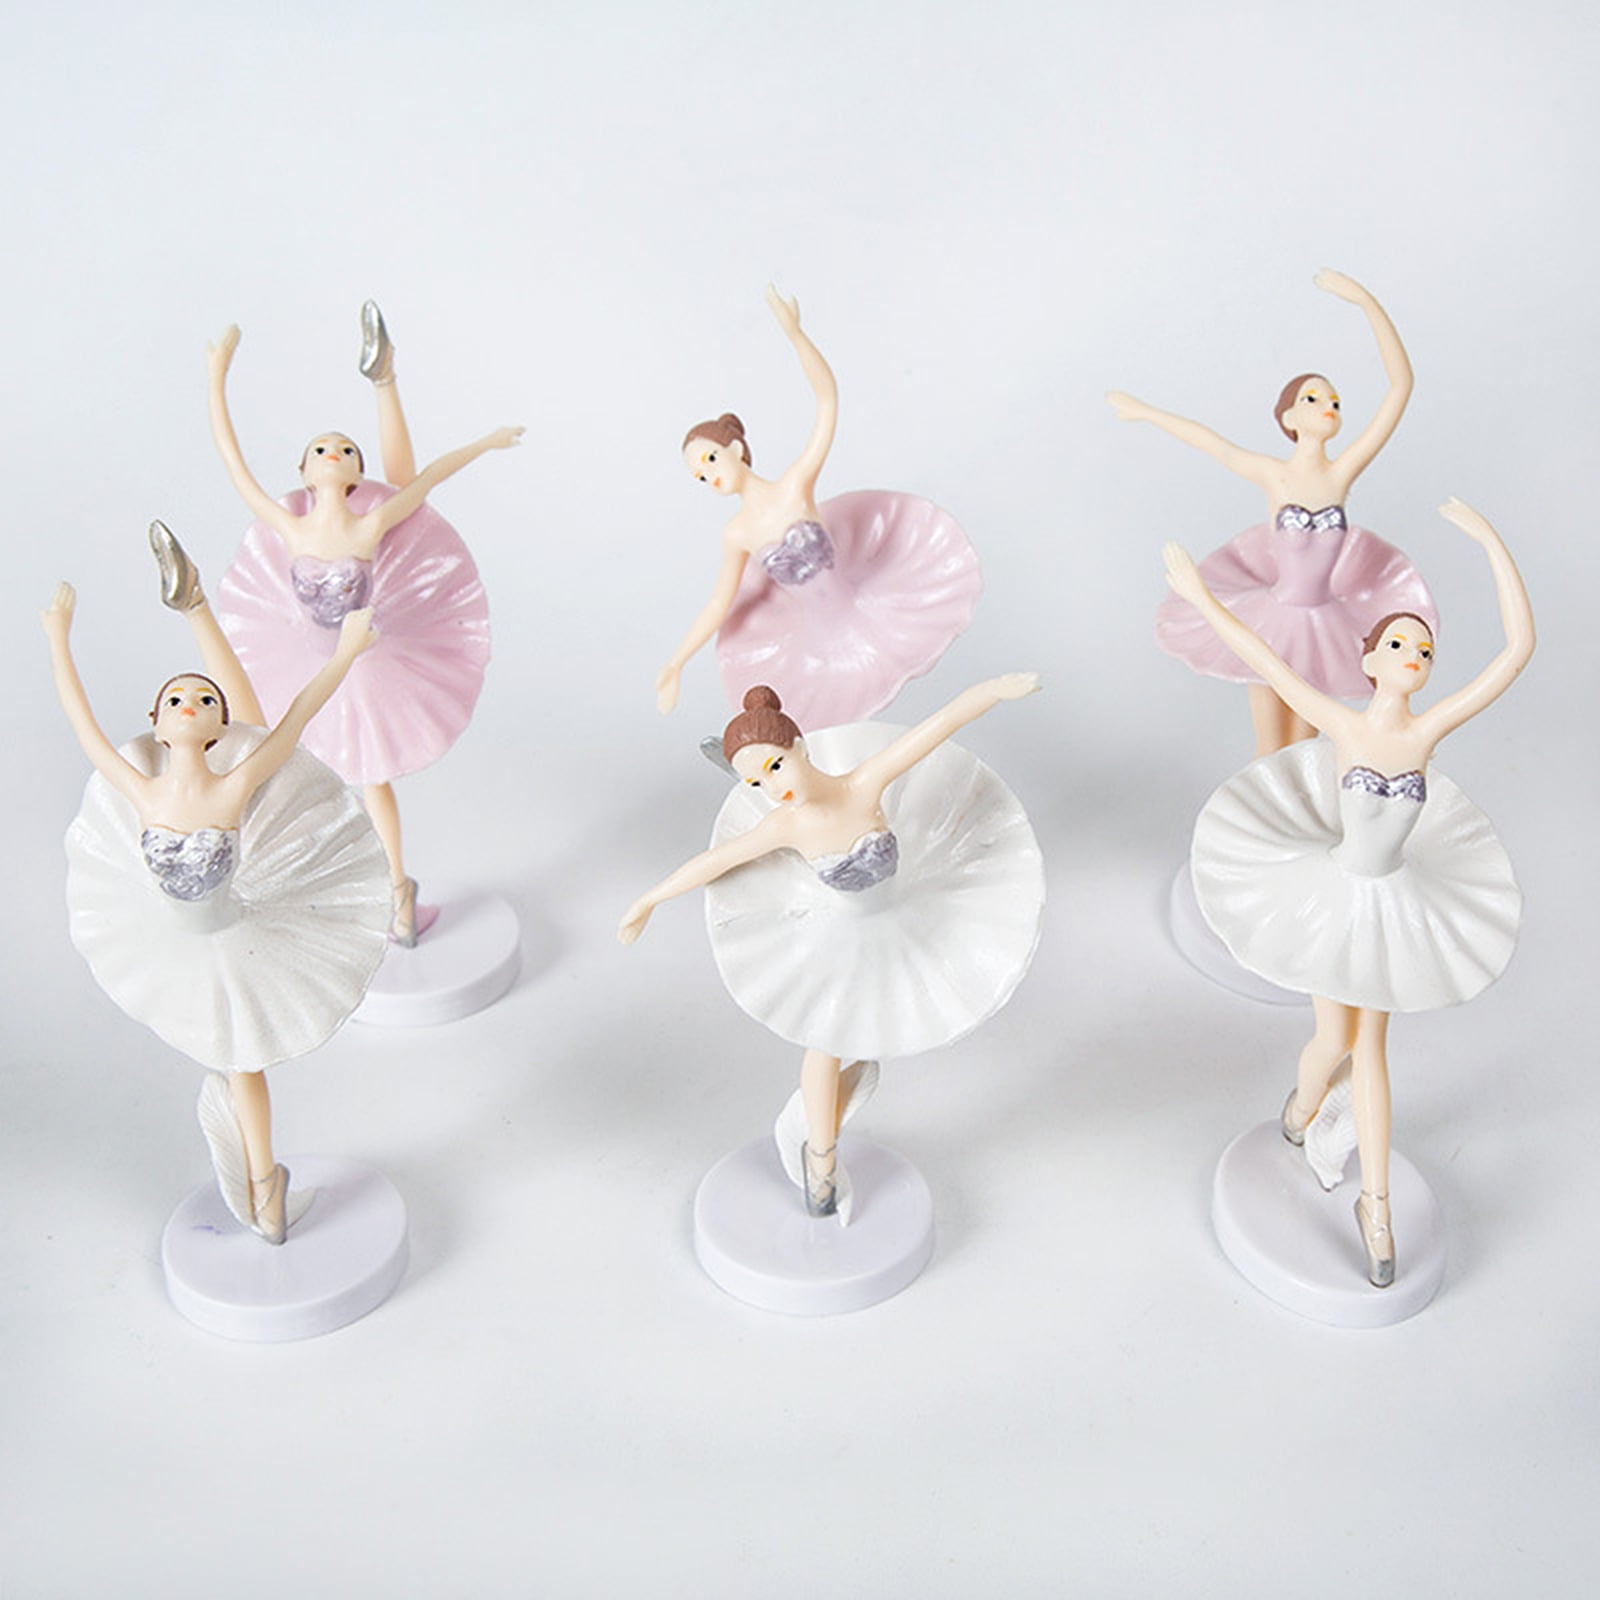 Krav Træde tilbage Nervesammenbrud Doolland Ballet Figurines Dessert Table Decoration Dancing Girl Dancer  White Pink Ballerina Plastic 3pcs For Birthday Cake - Walmart.com